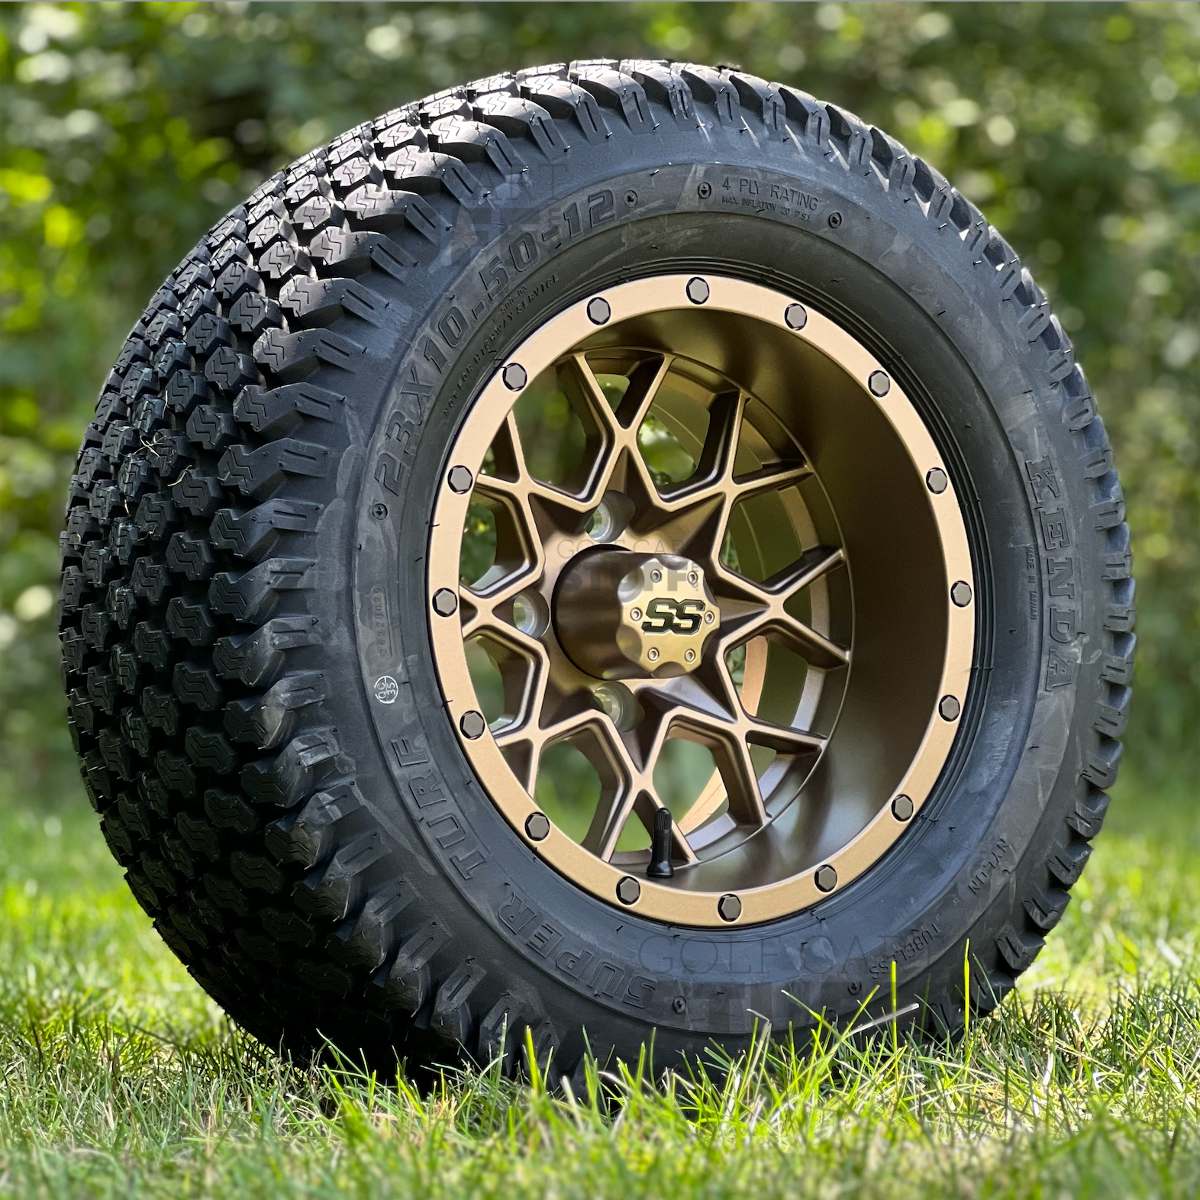 12" Matrix Matte Bronze wheel and 23x10.5-12 Kenda tire